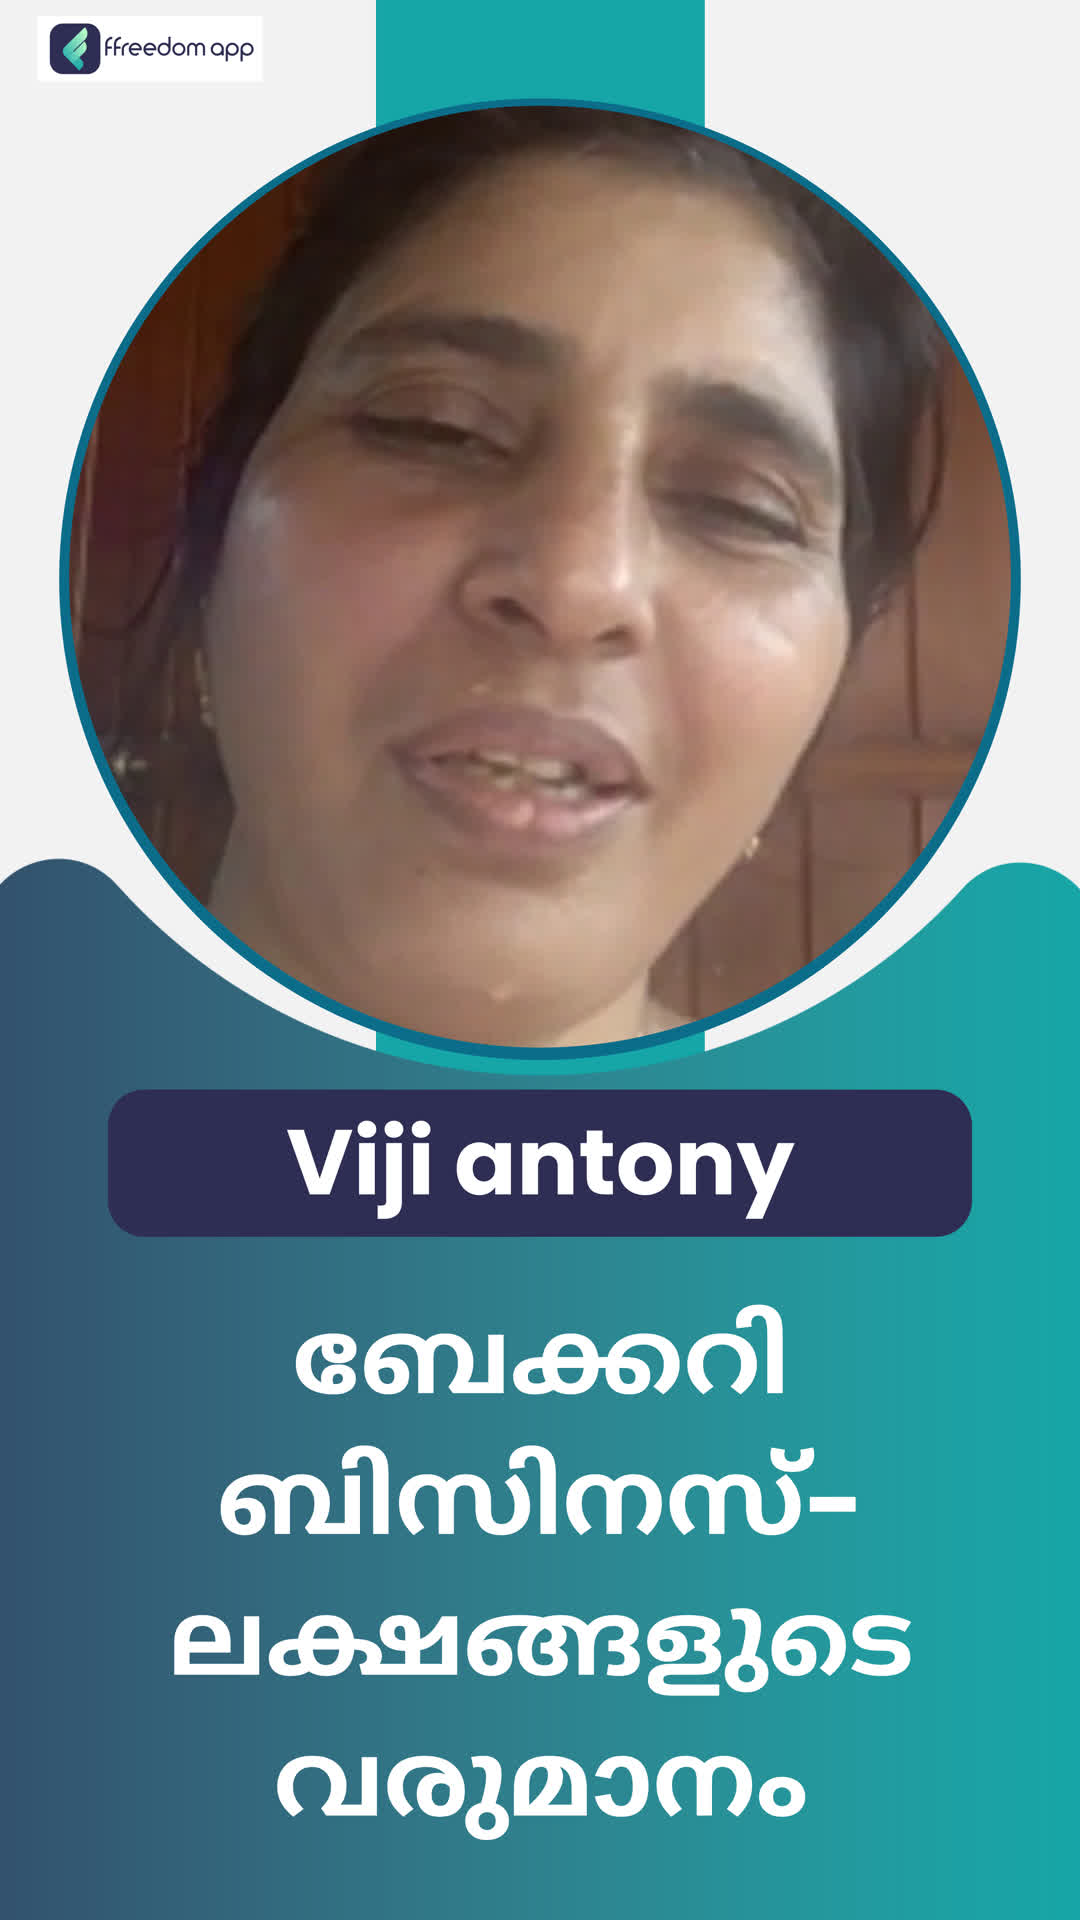 Viji antony's Honest Review of ffreedom app - Cochin ,Kerala